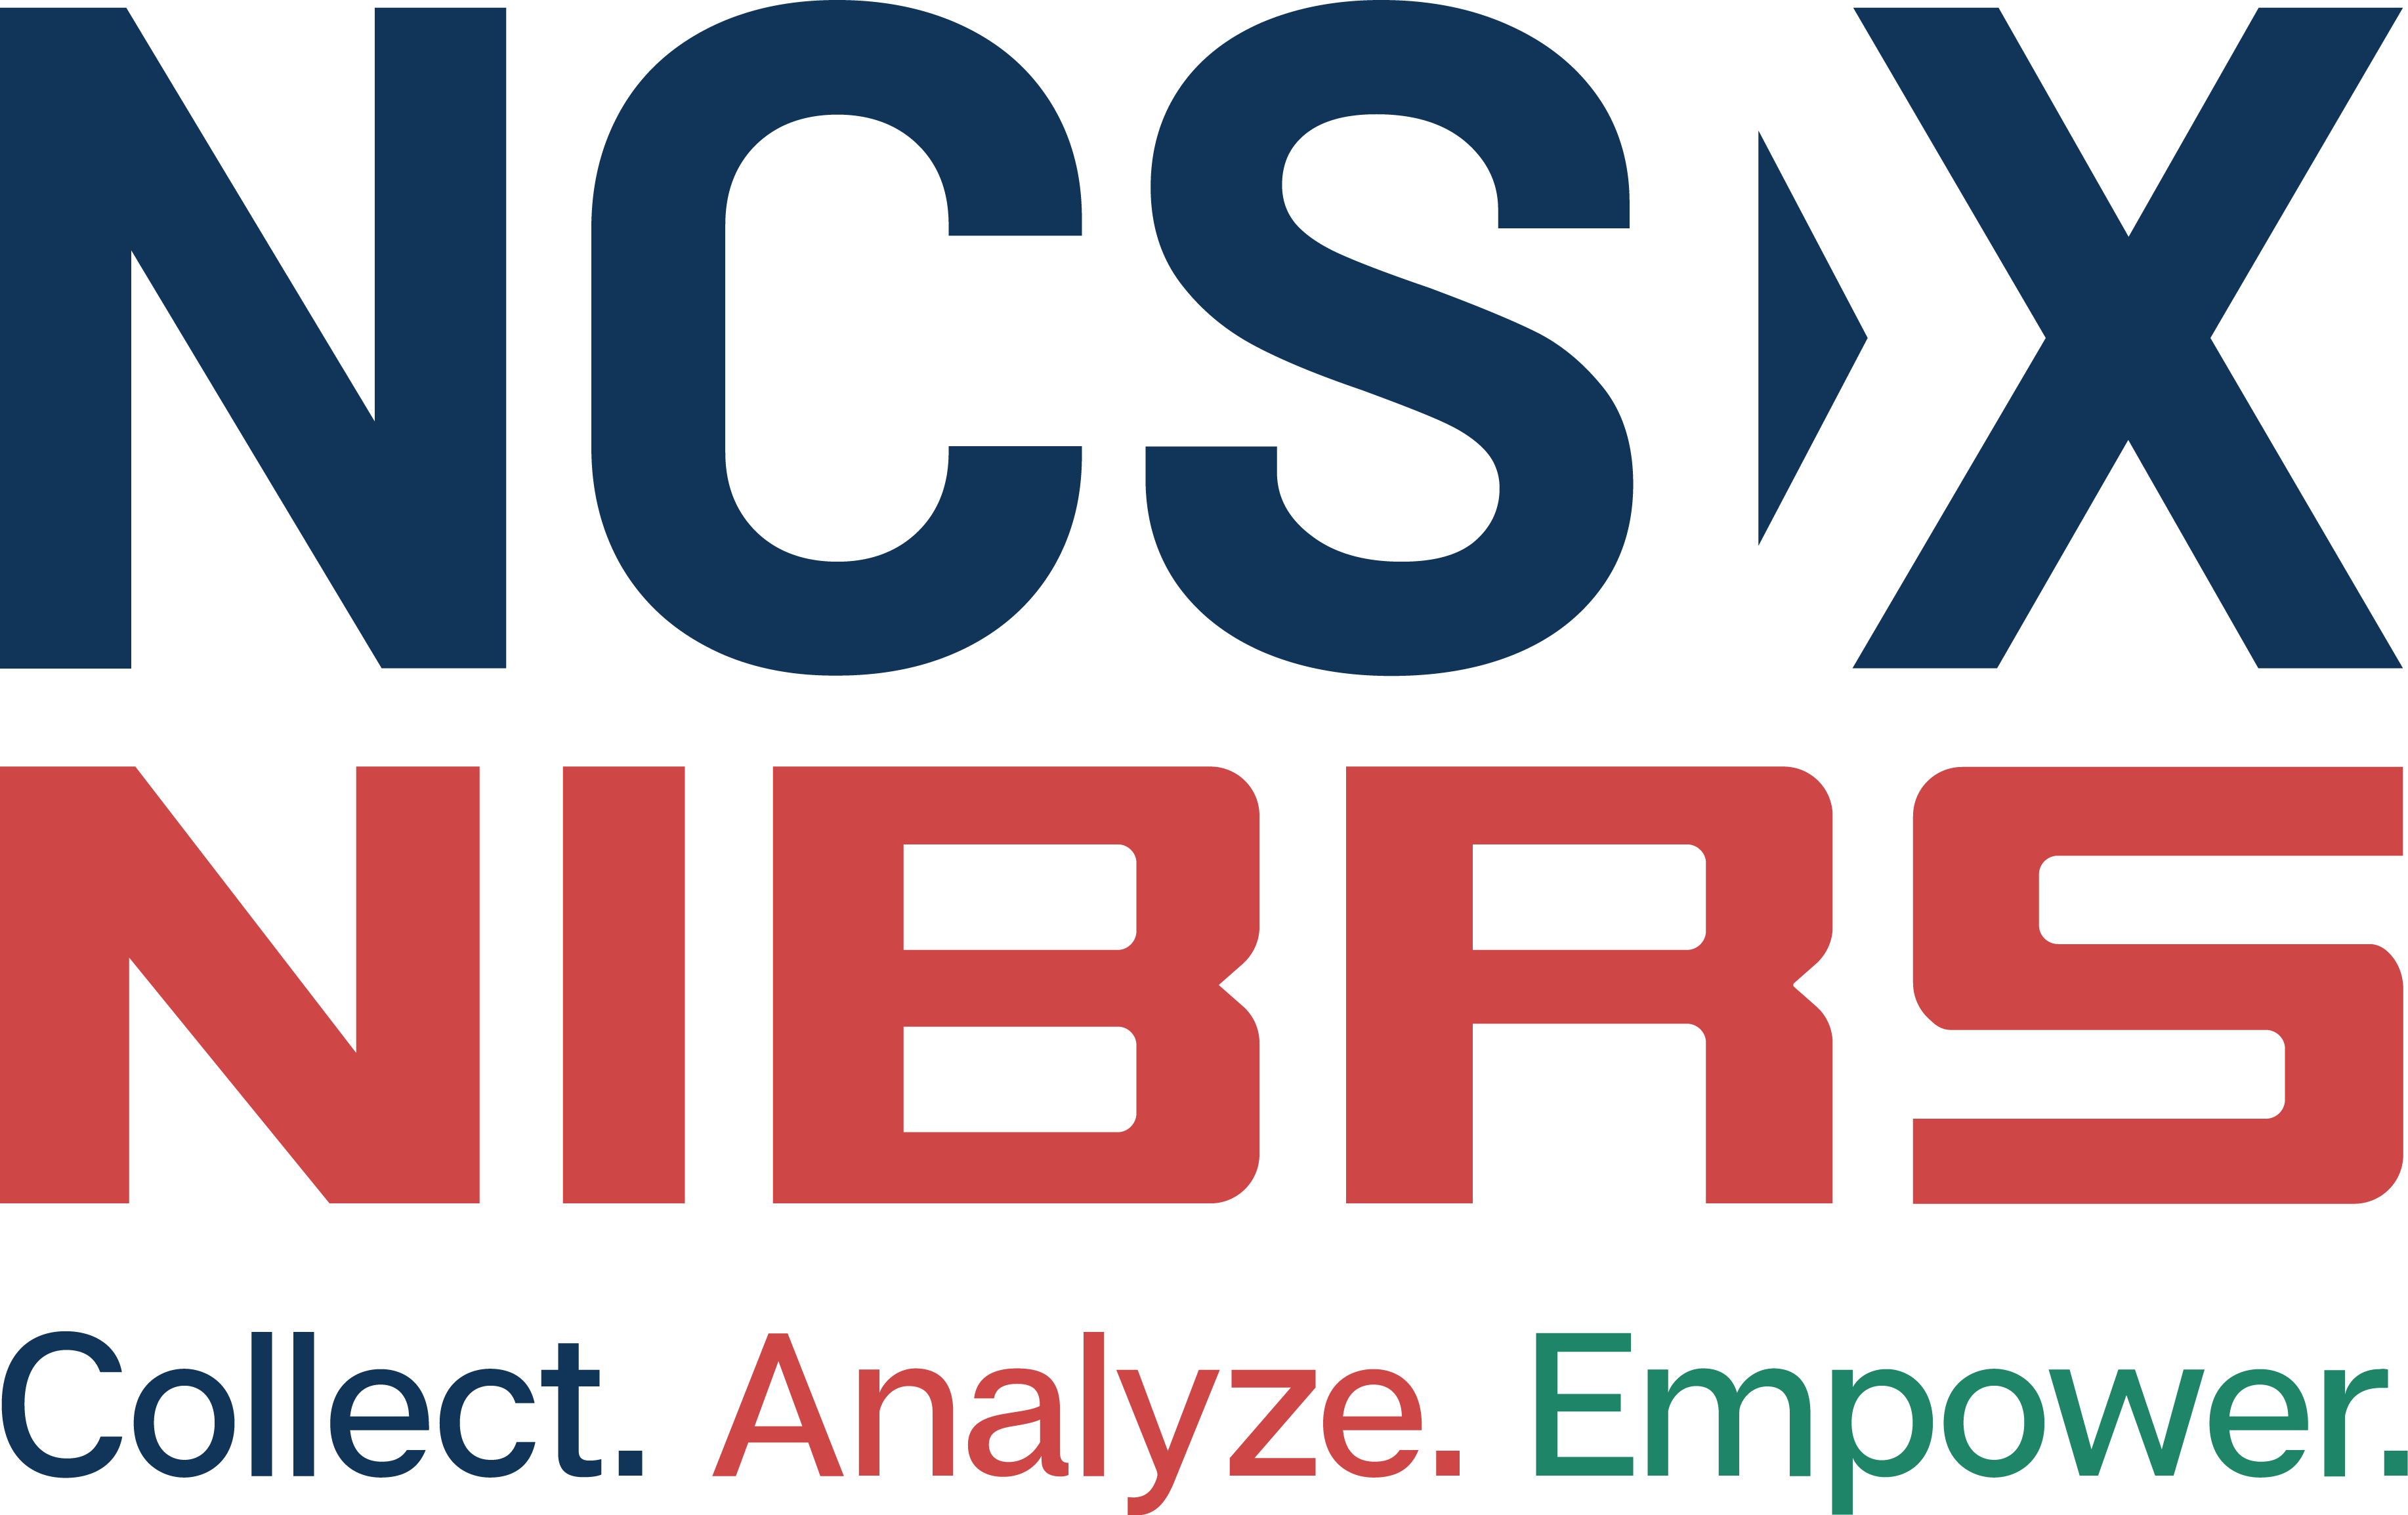 logotext image: NCS-X NIBERS. Collect. Analyze. Empower.